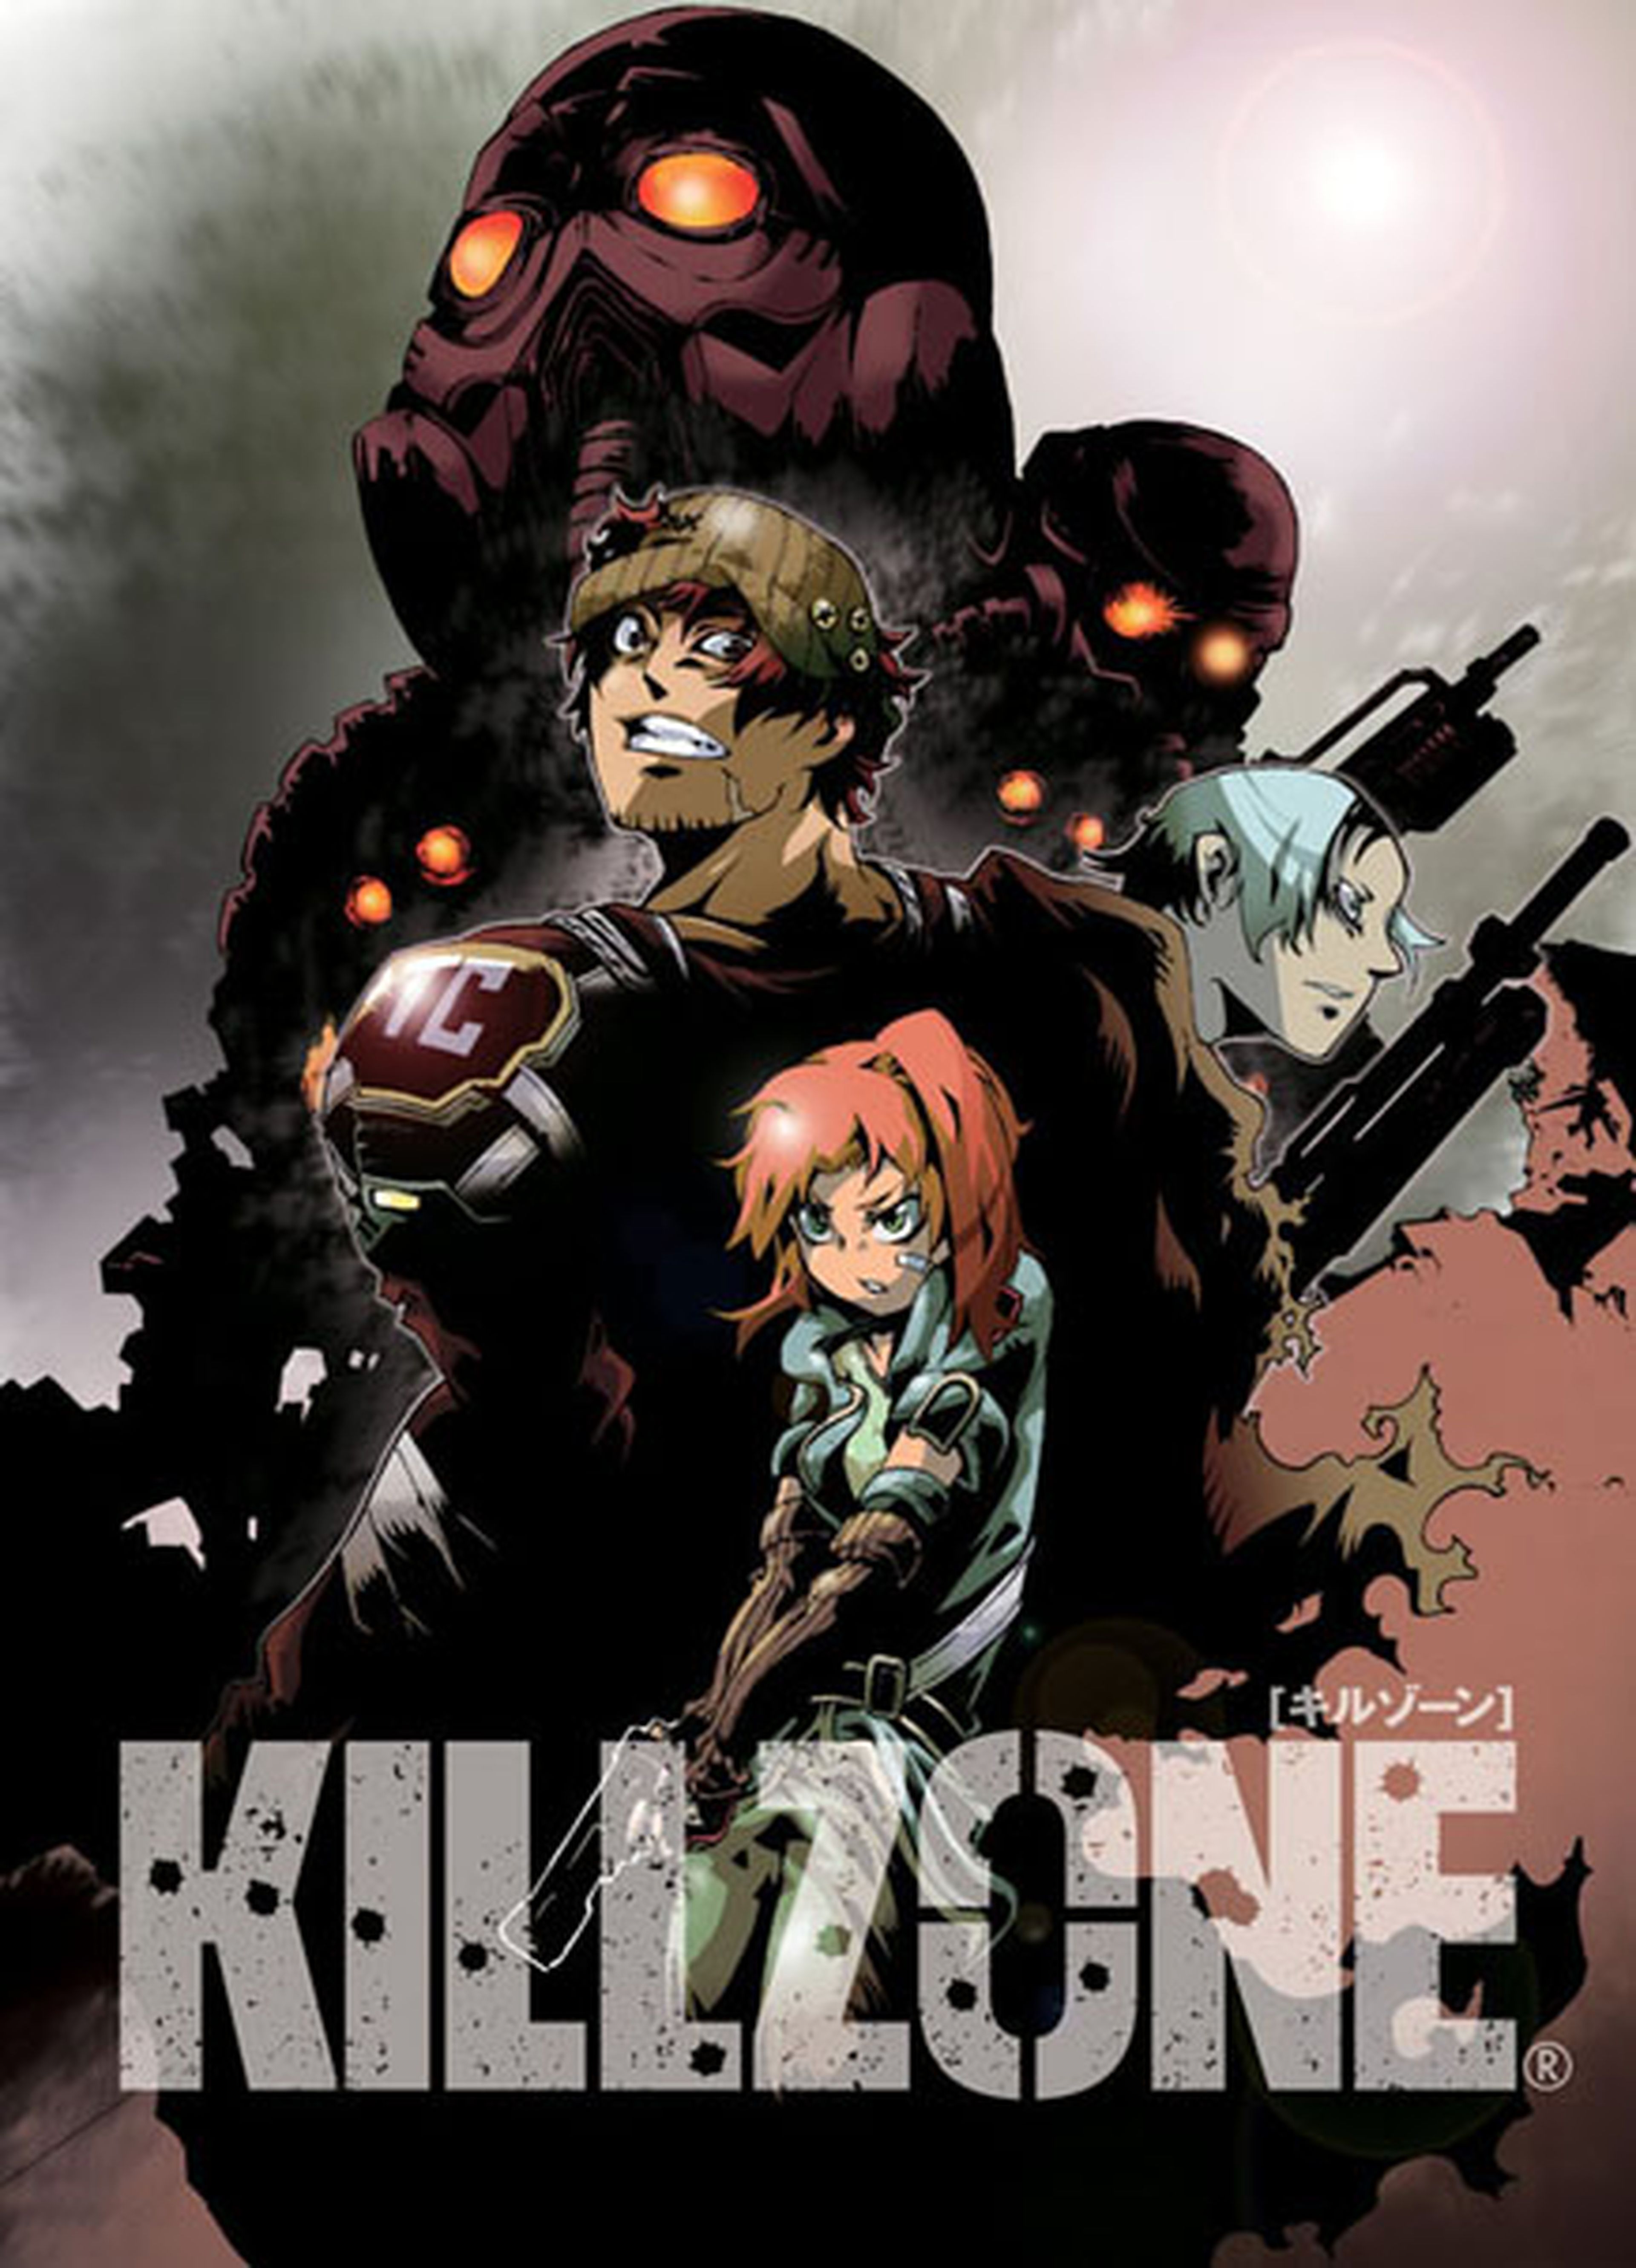 Confirmado un one-shot manga de Killzone